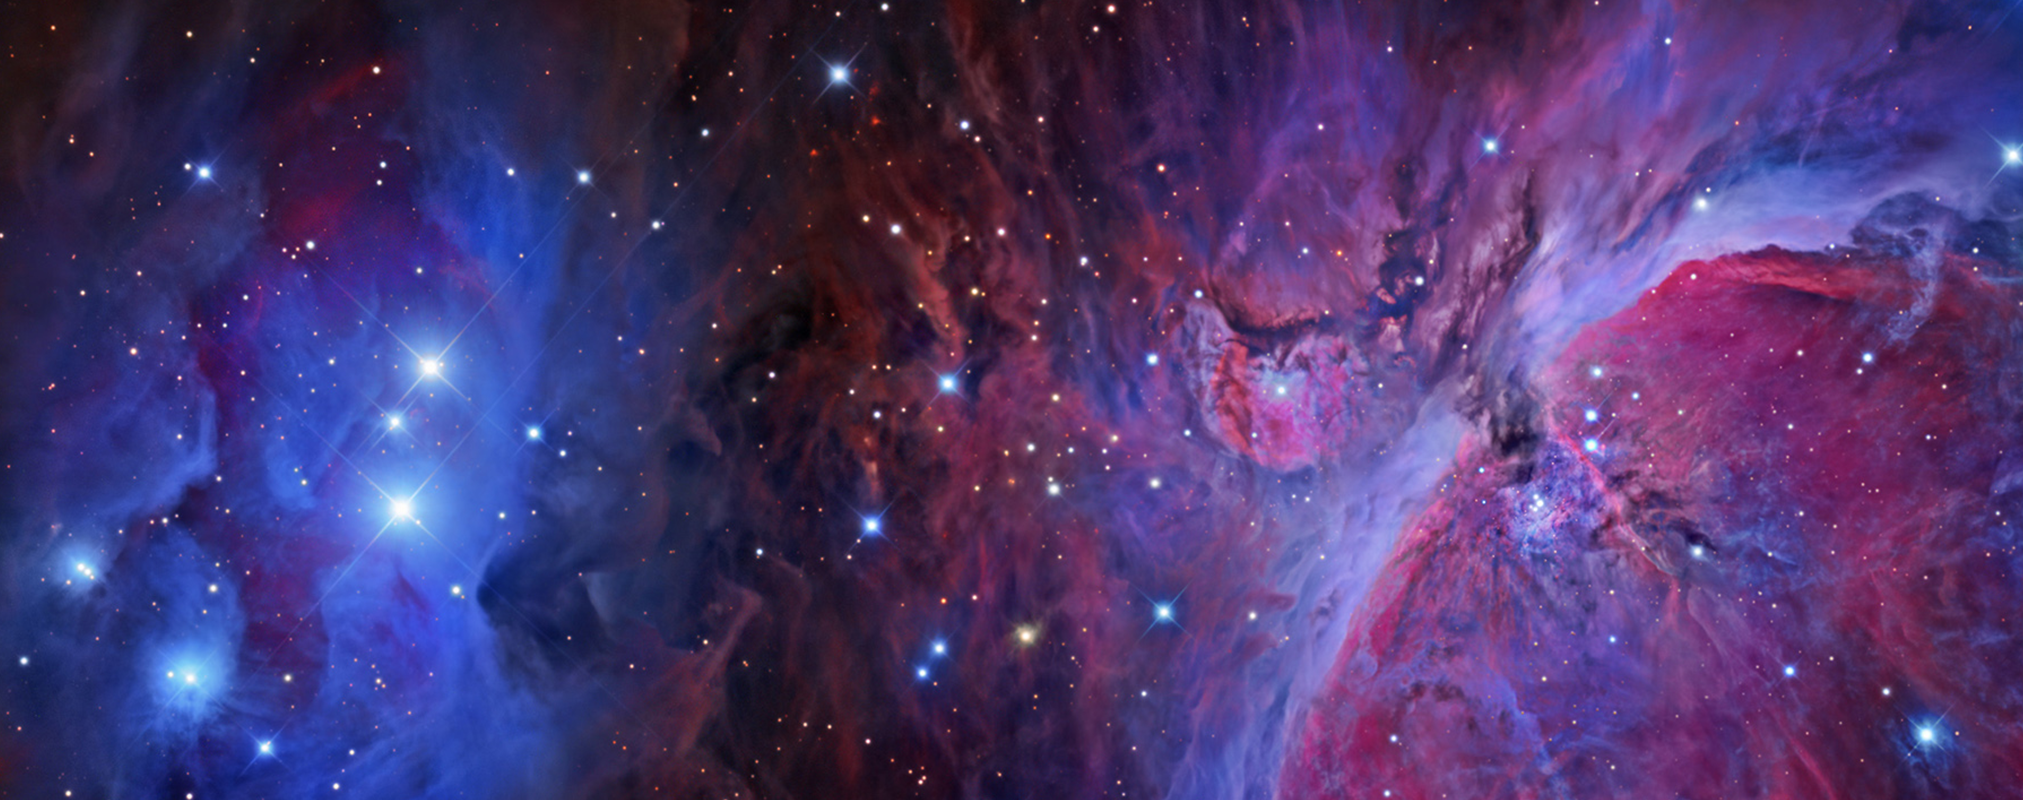 Orion Nebula by Ryan Hannahoe